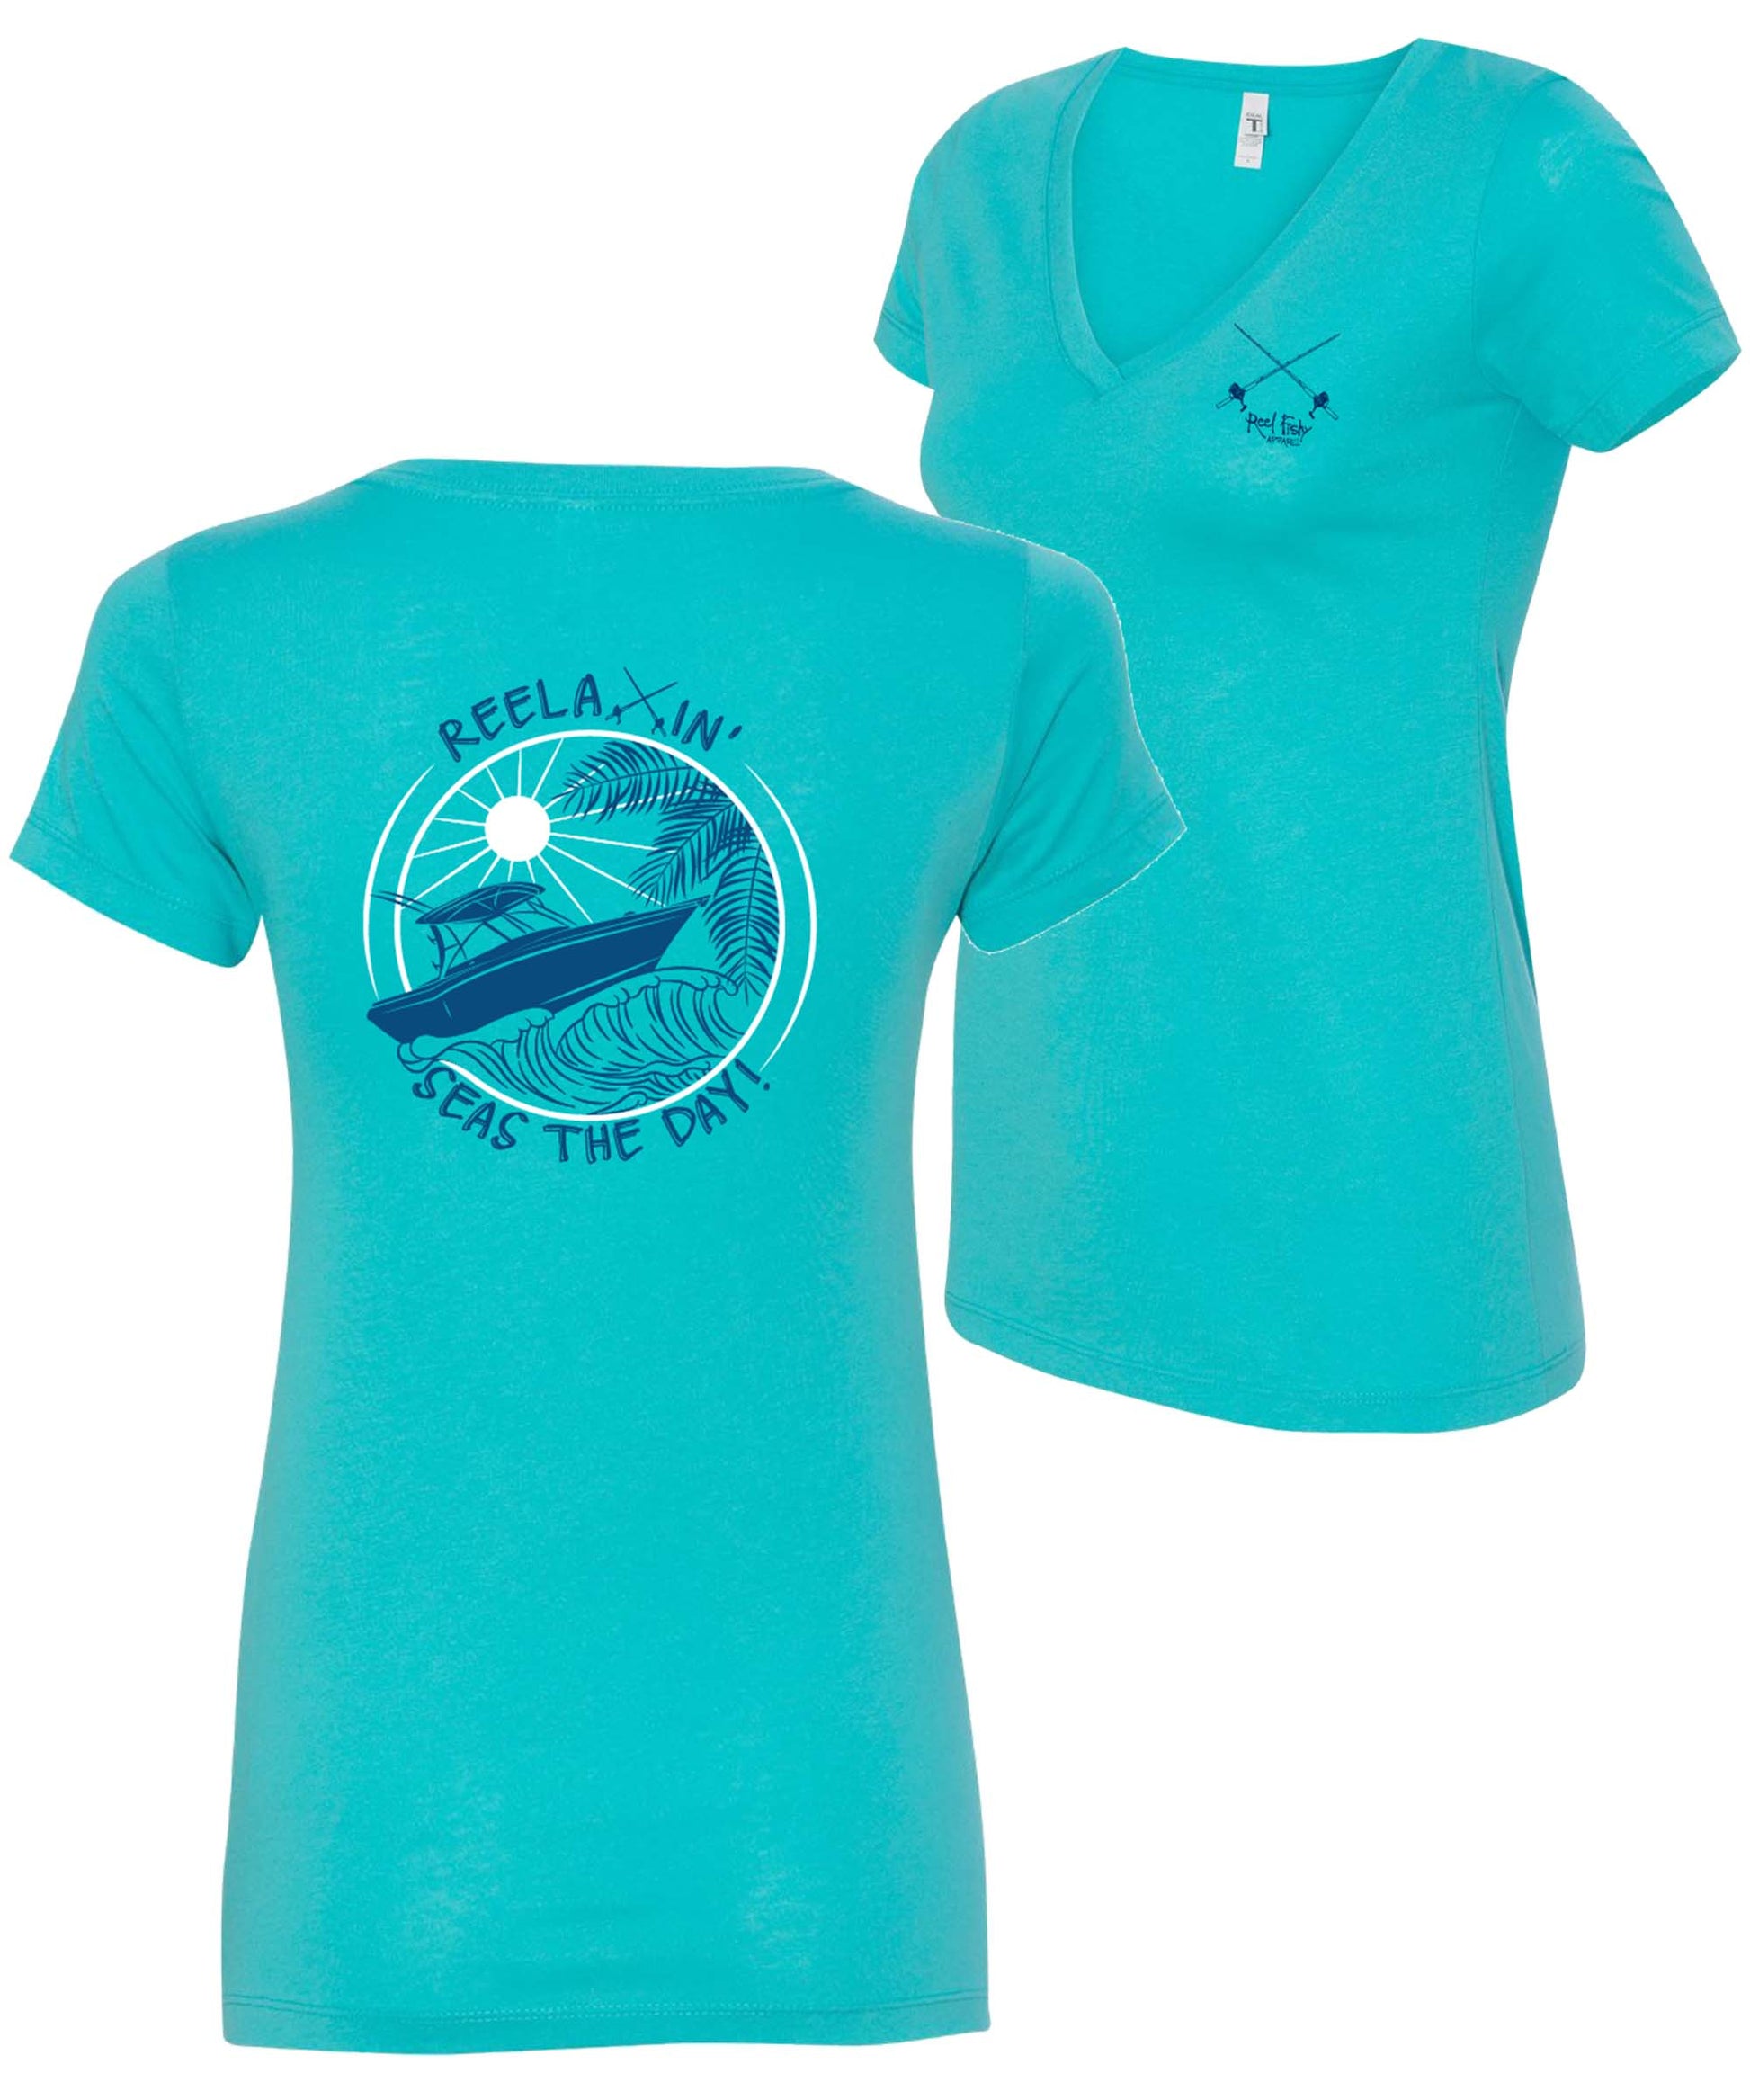 Ladies Reelaxin' - Seas the Day v-neck cotton shirt in Tahiti Blue